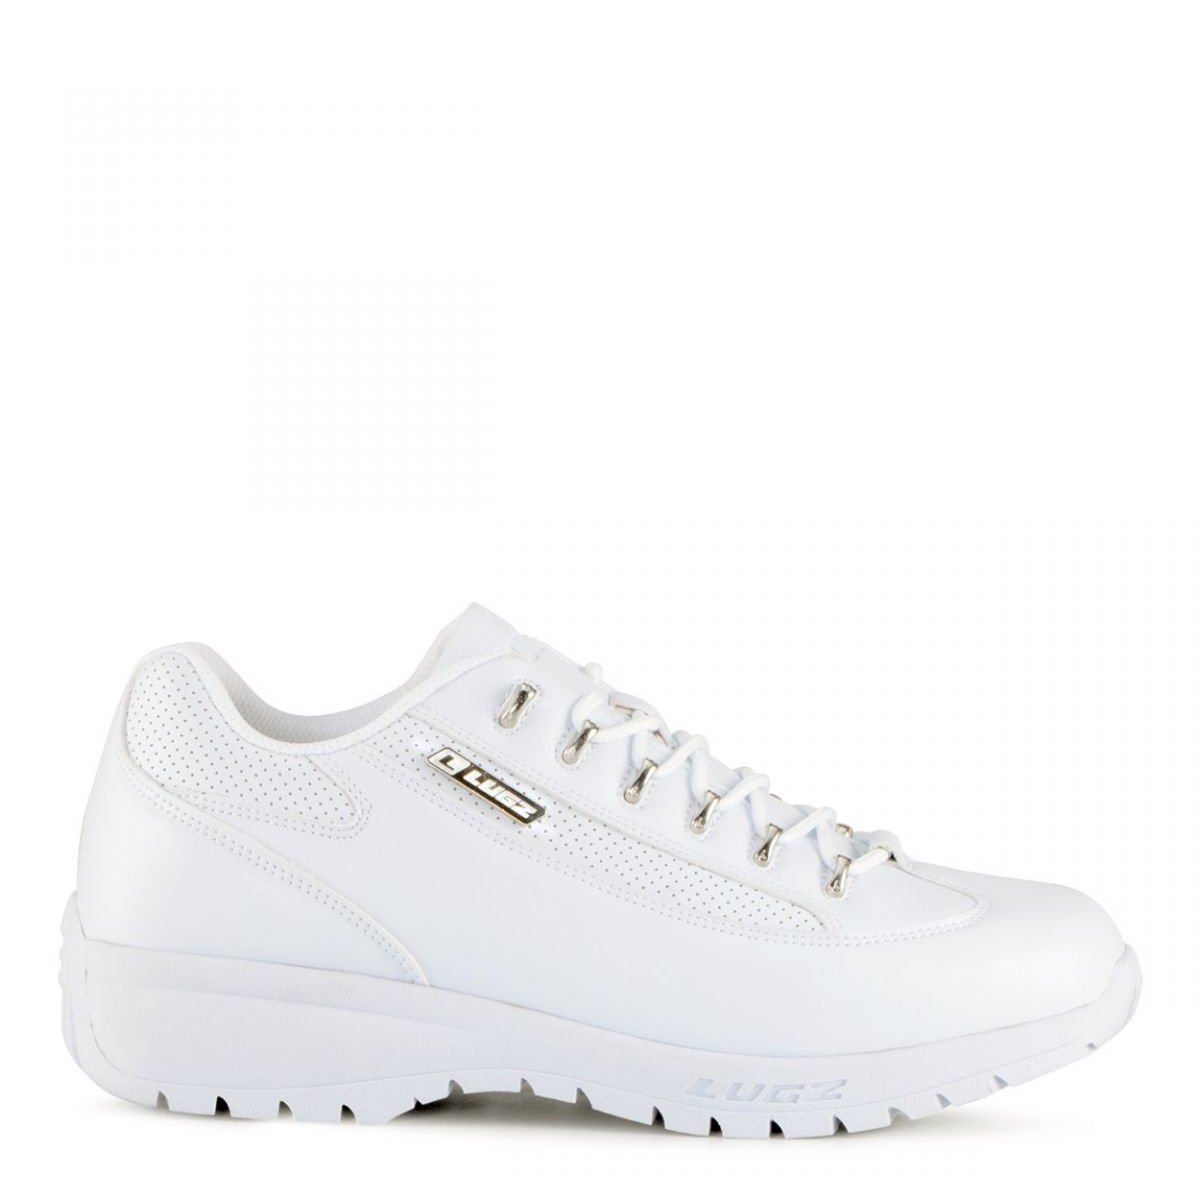 Lugz Men's Express Sneaker White - MEXPRSPV-100 WHITE - WHITE, 11